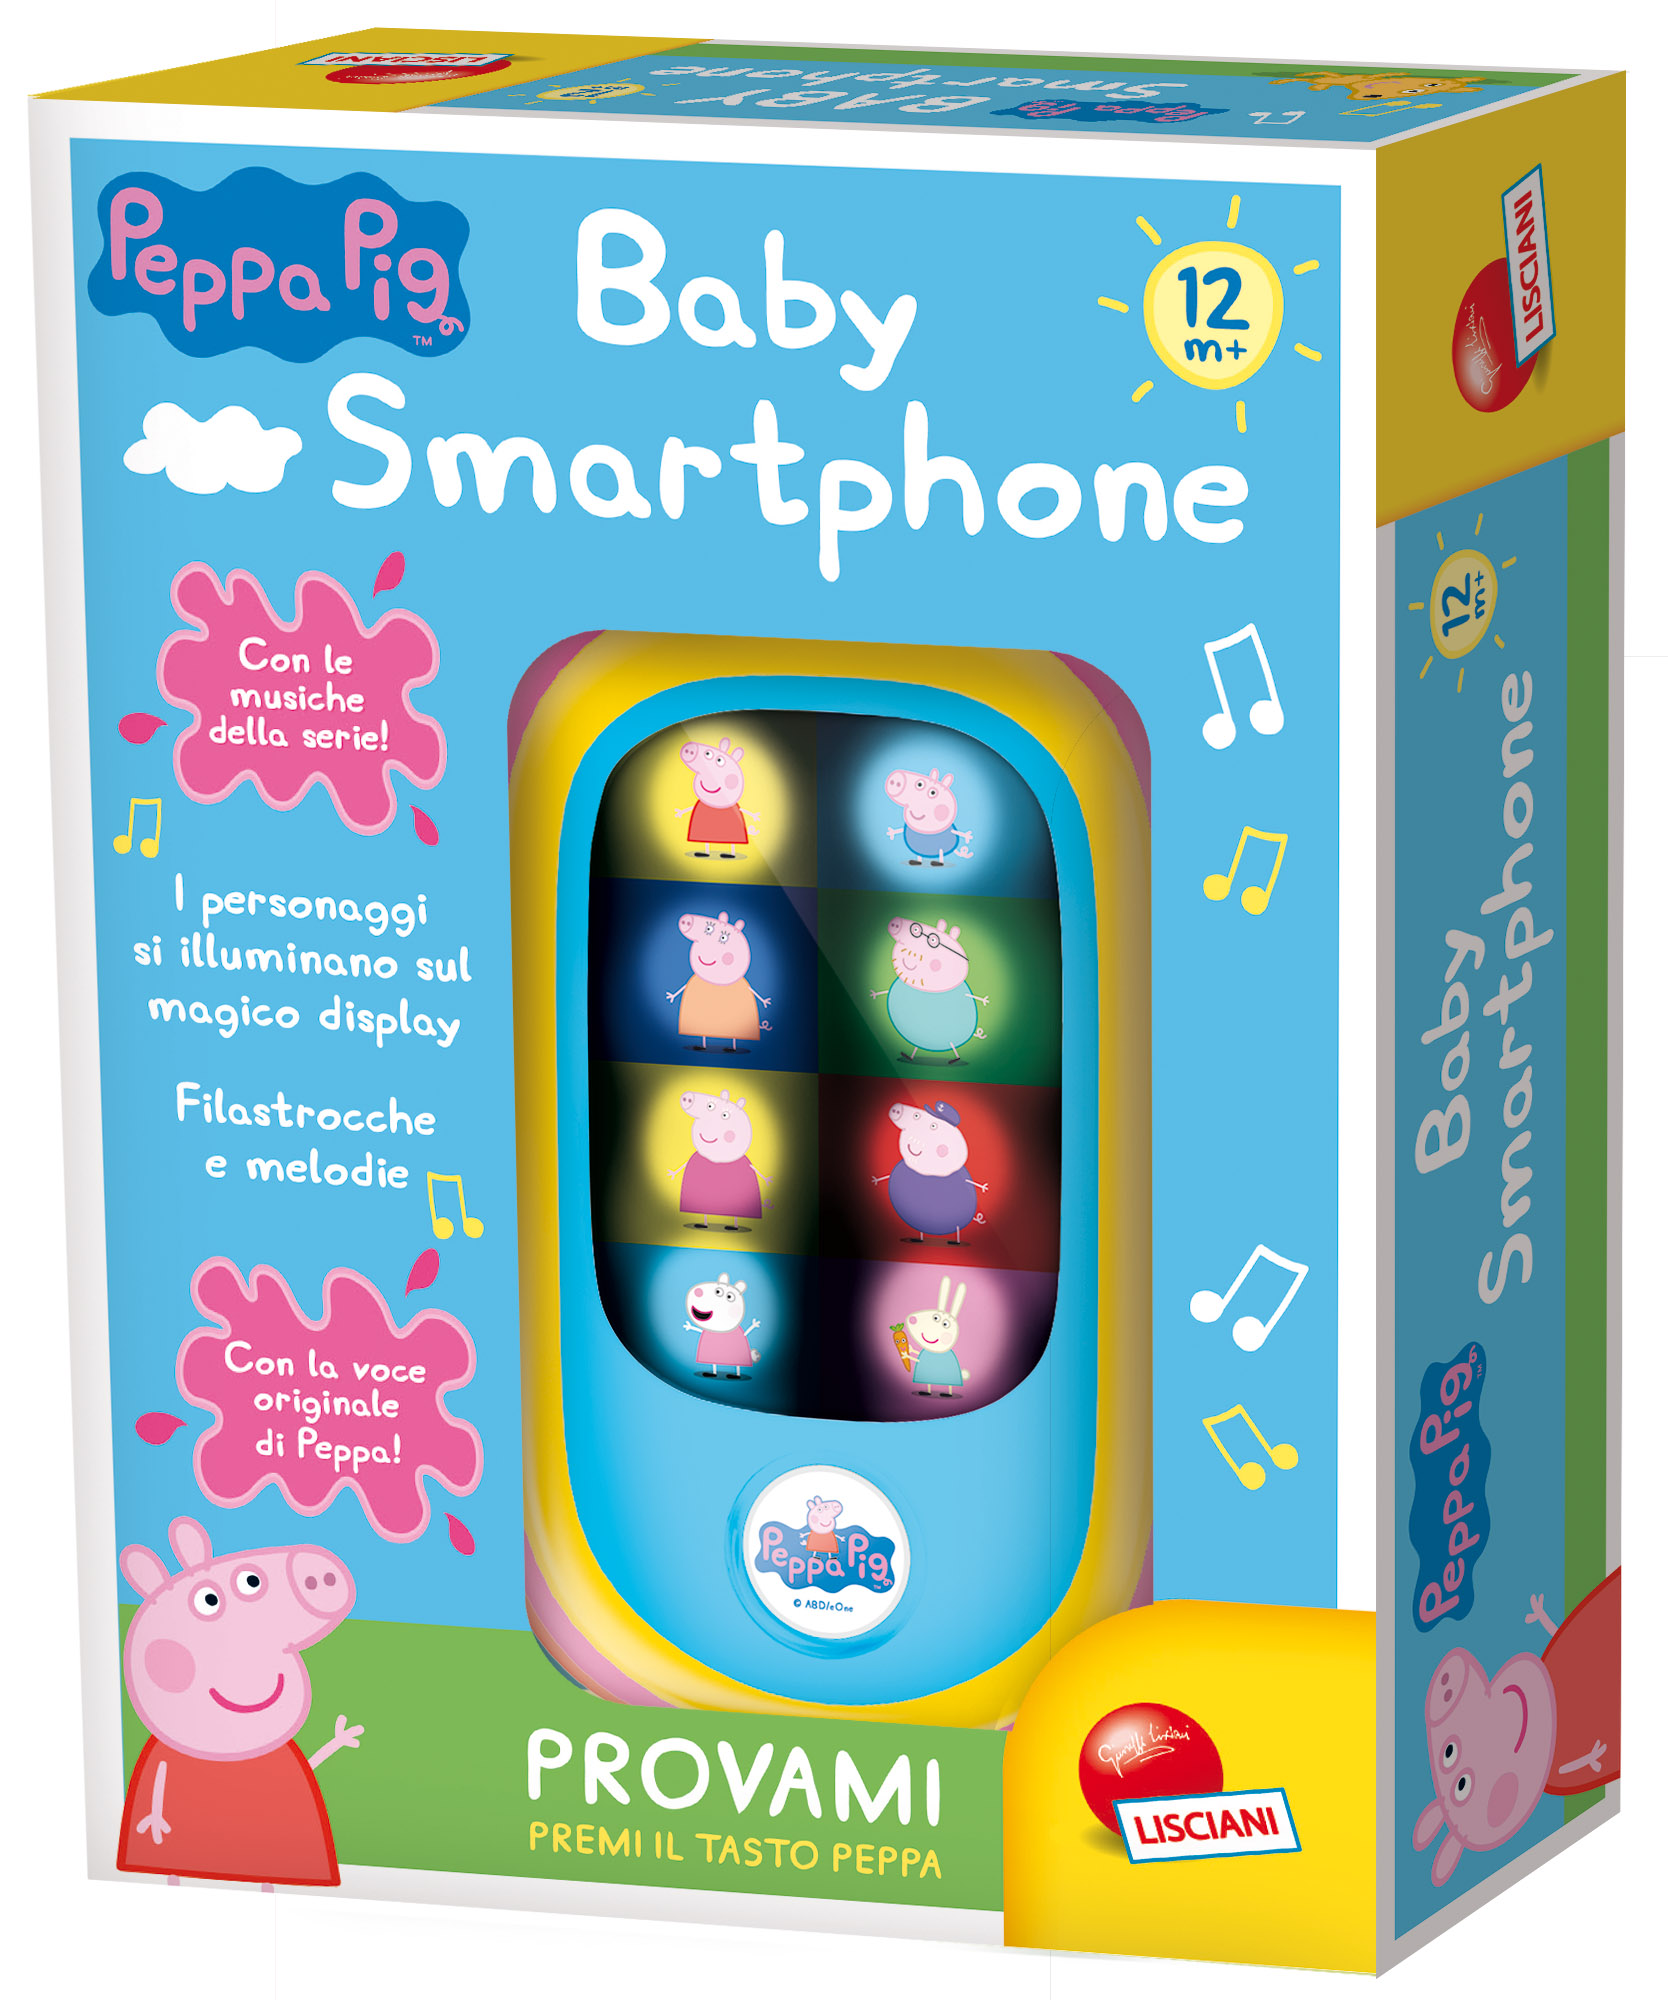 Lisciani - peppa pig baby smartphone led - PEPPA PIG